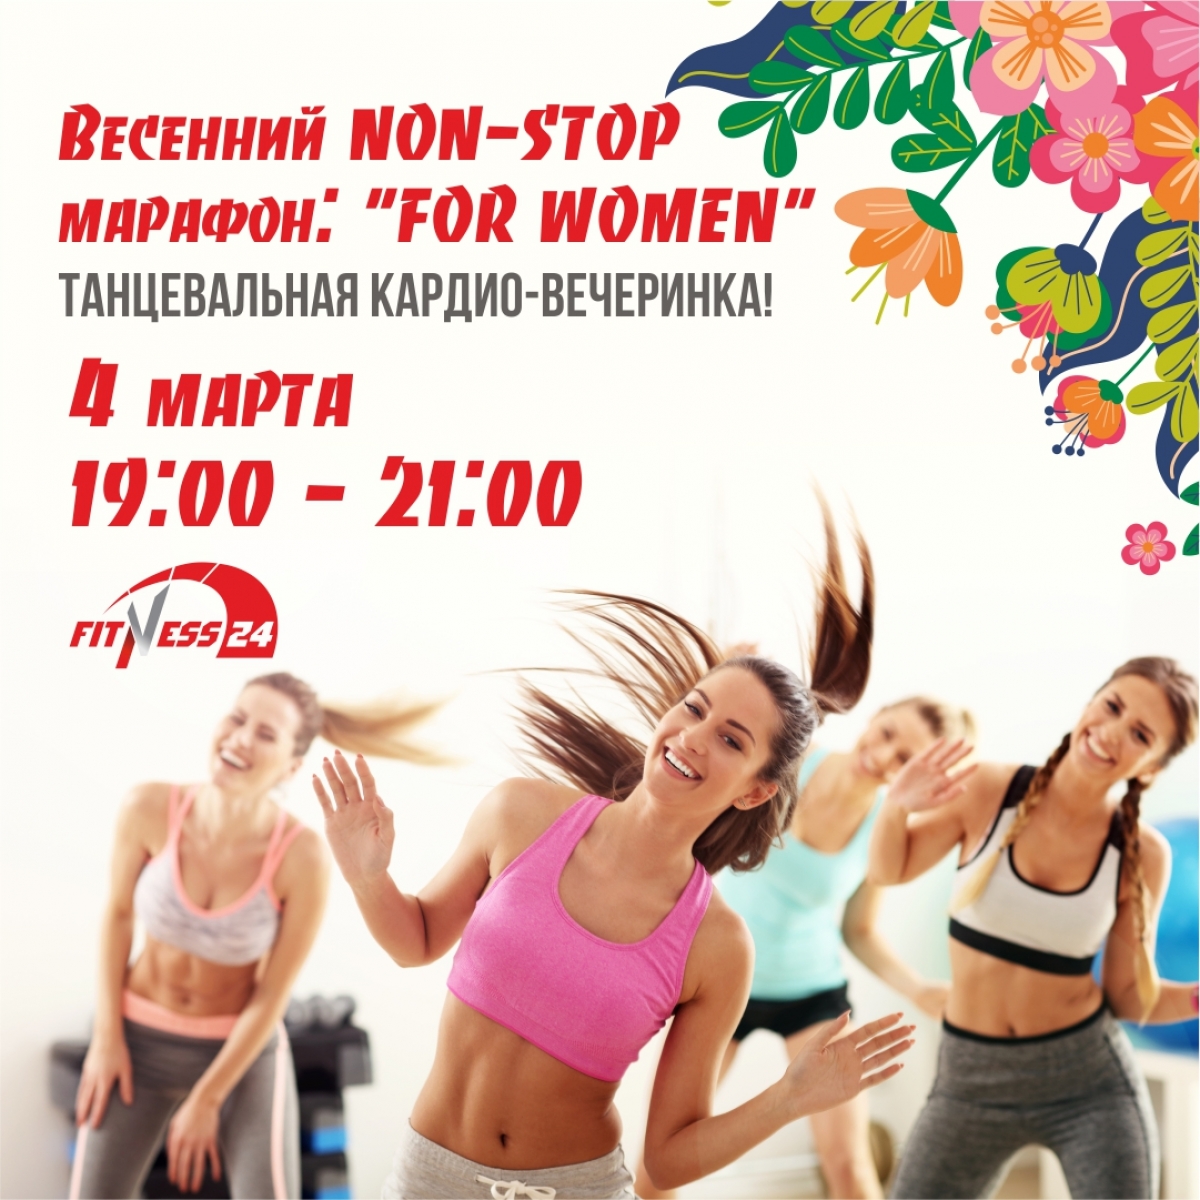 Весенний NON-stop марафон в Fitness24 Лиговский!